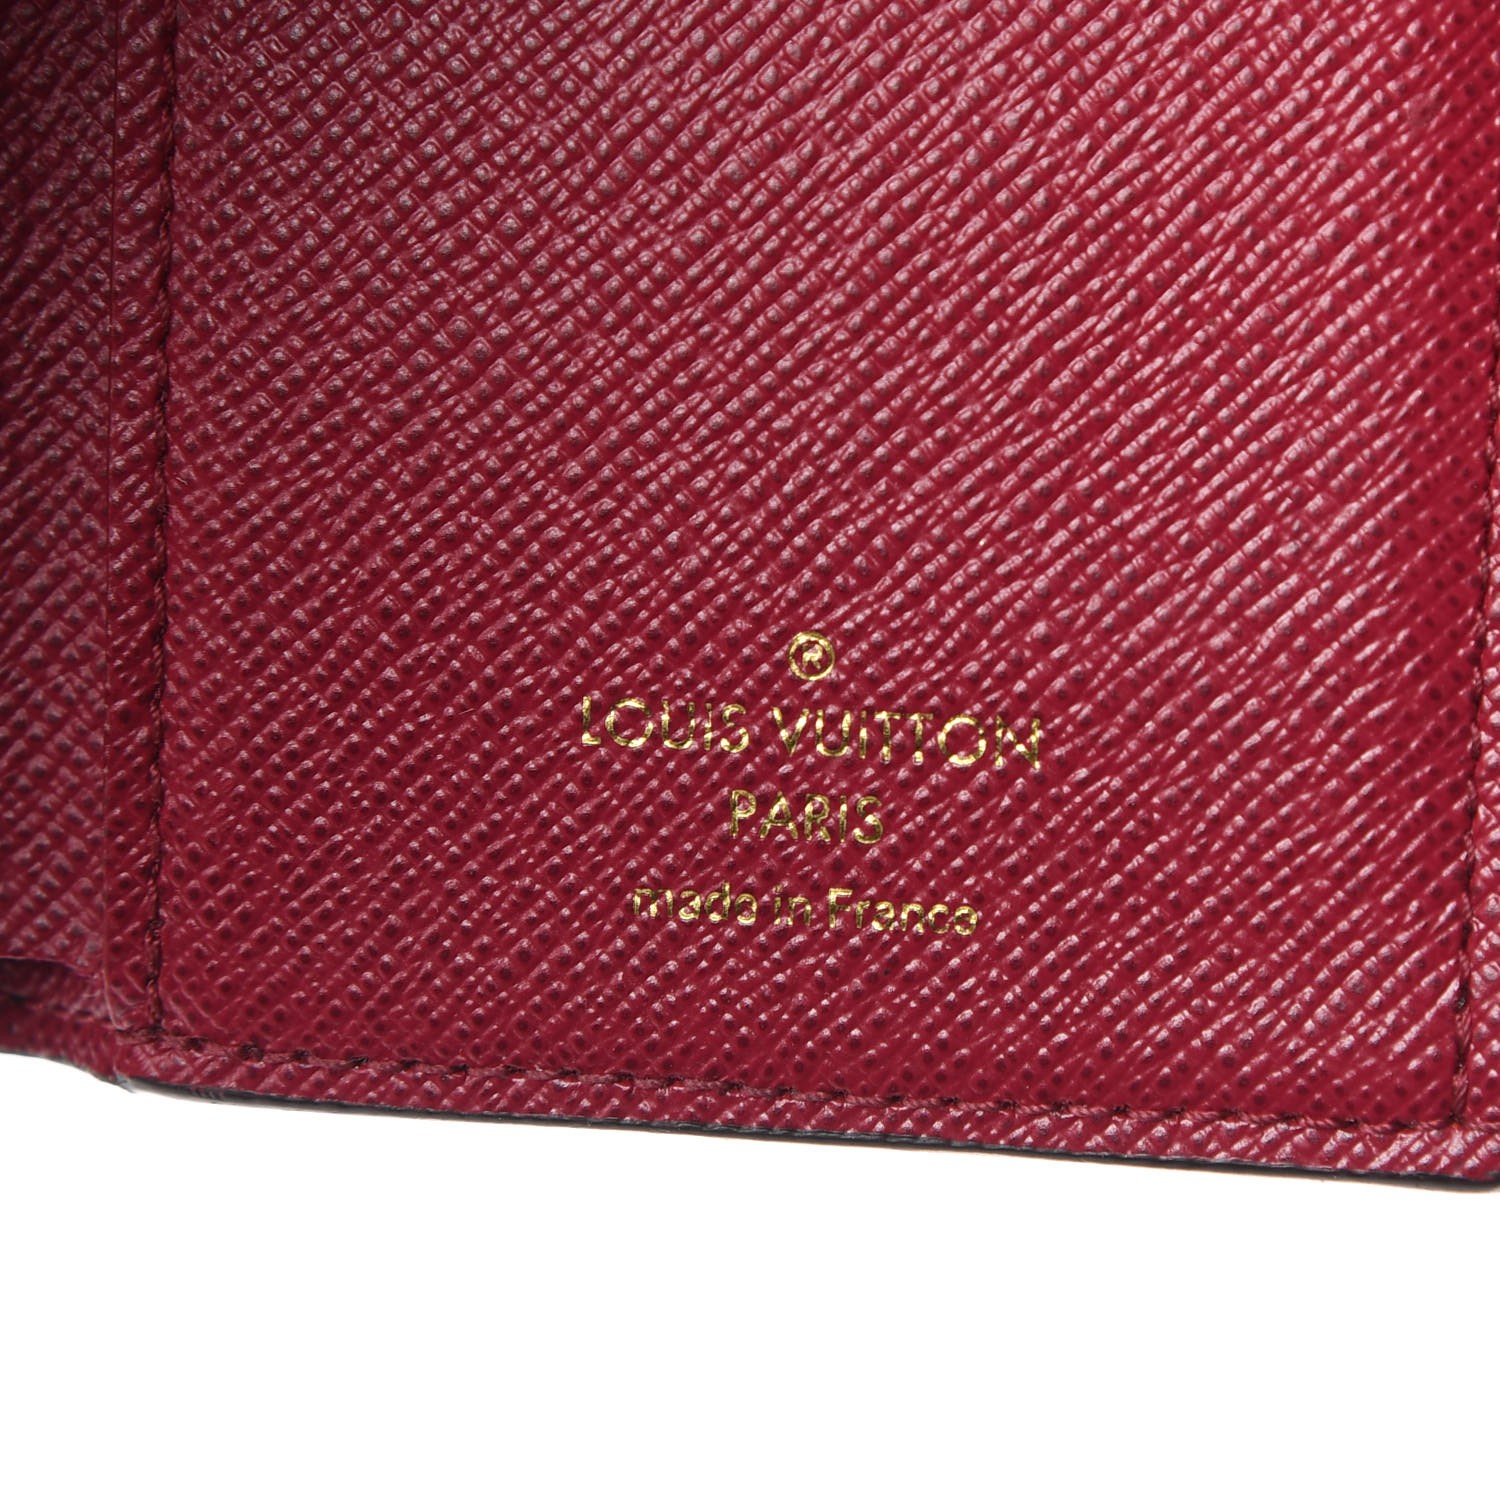 Louis Vuitton NM Compact Victorine Wallet Limited Edition Kabuki